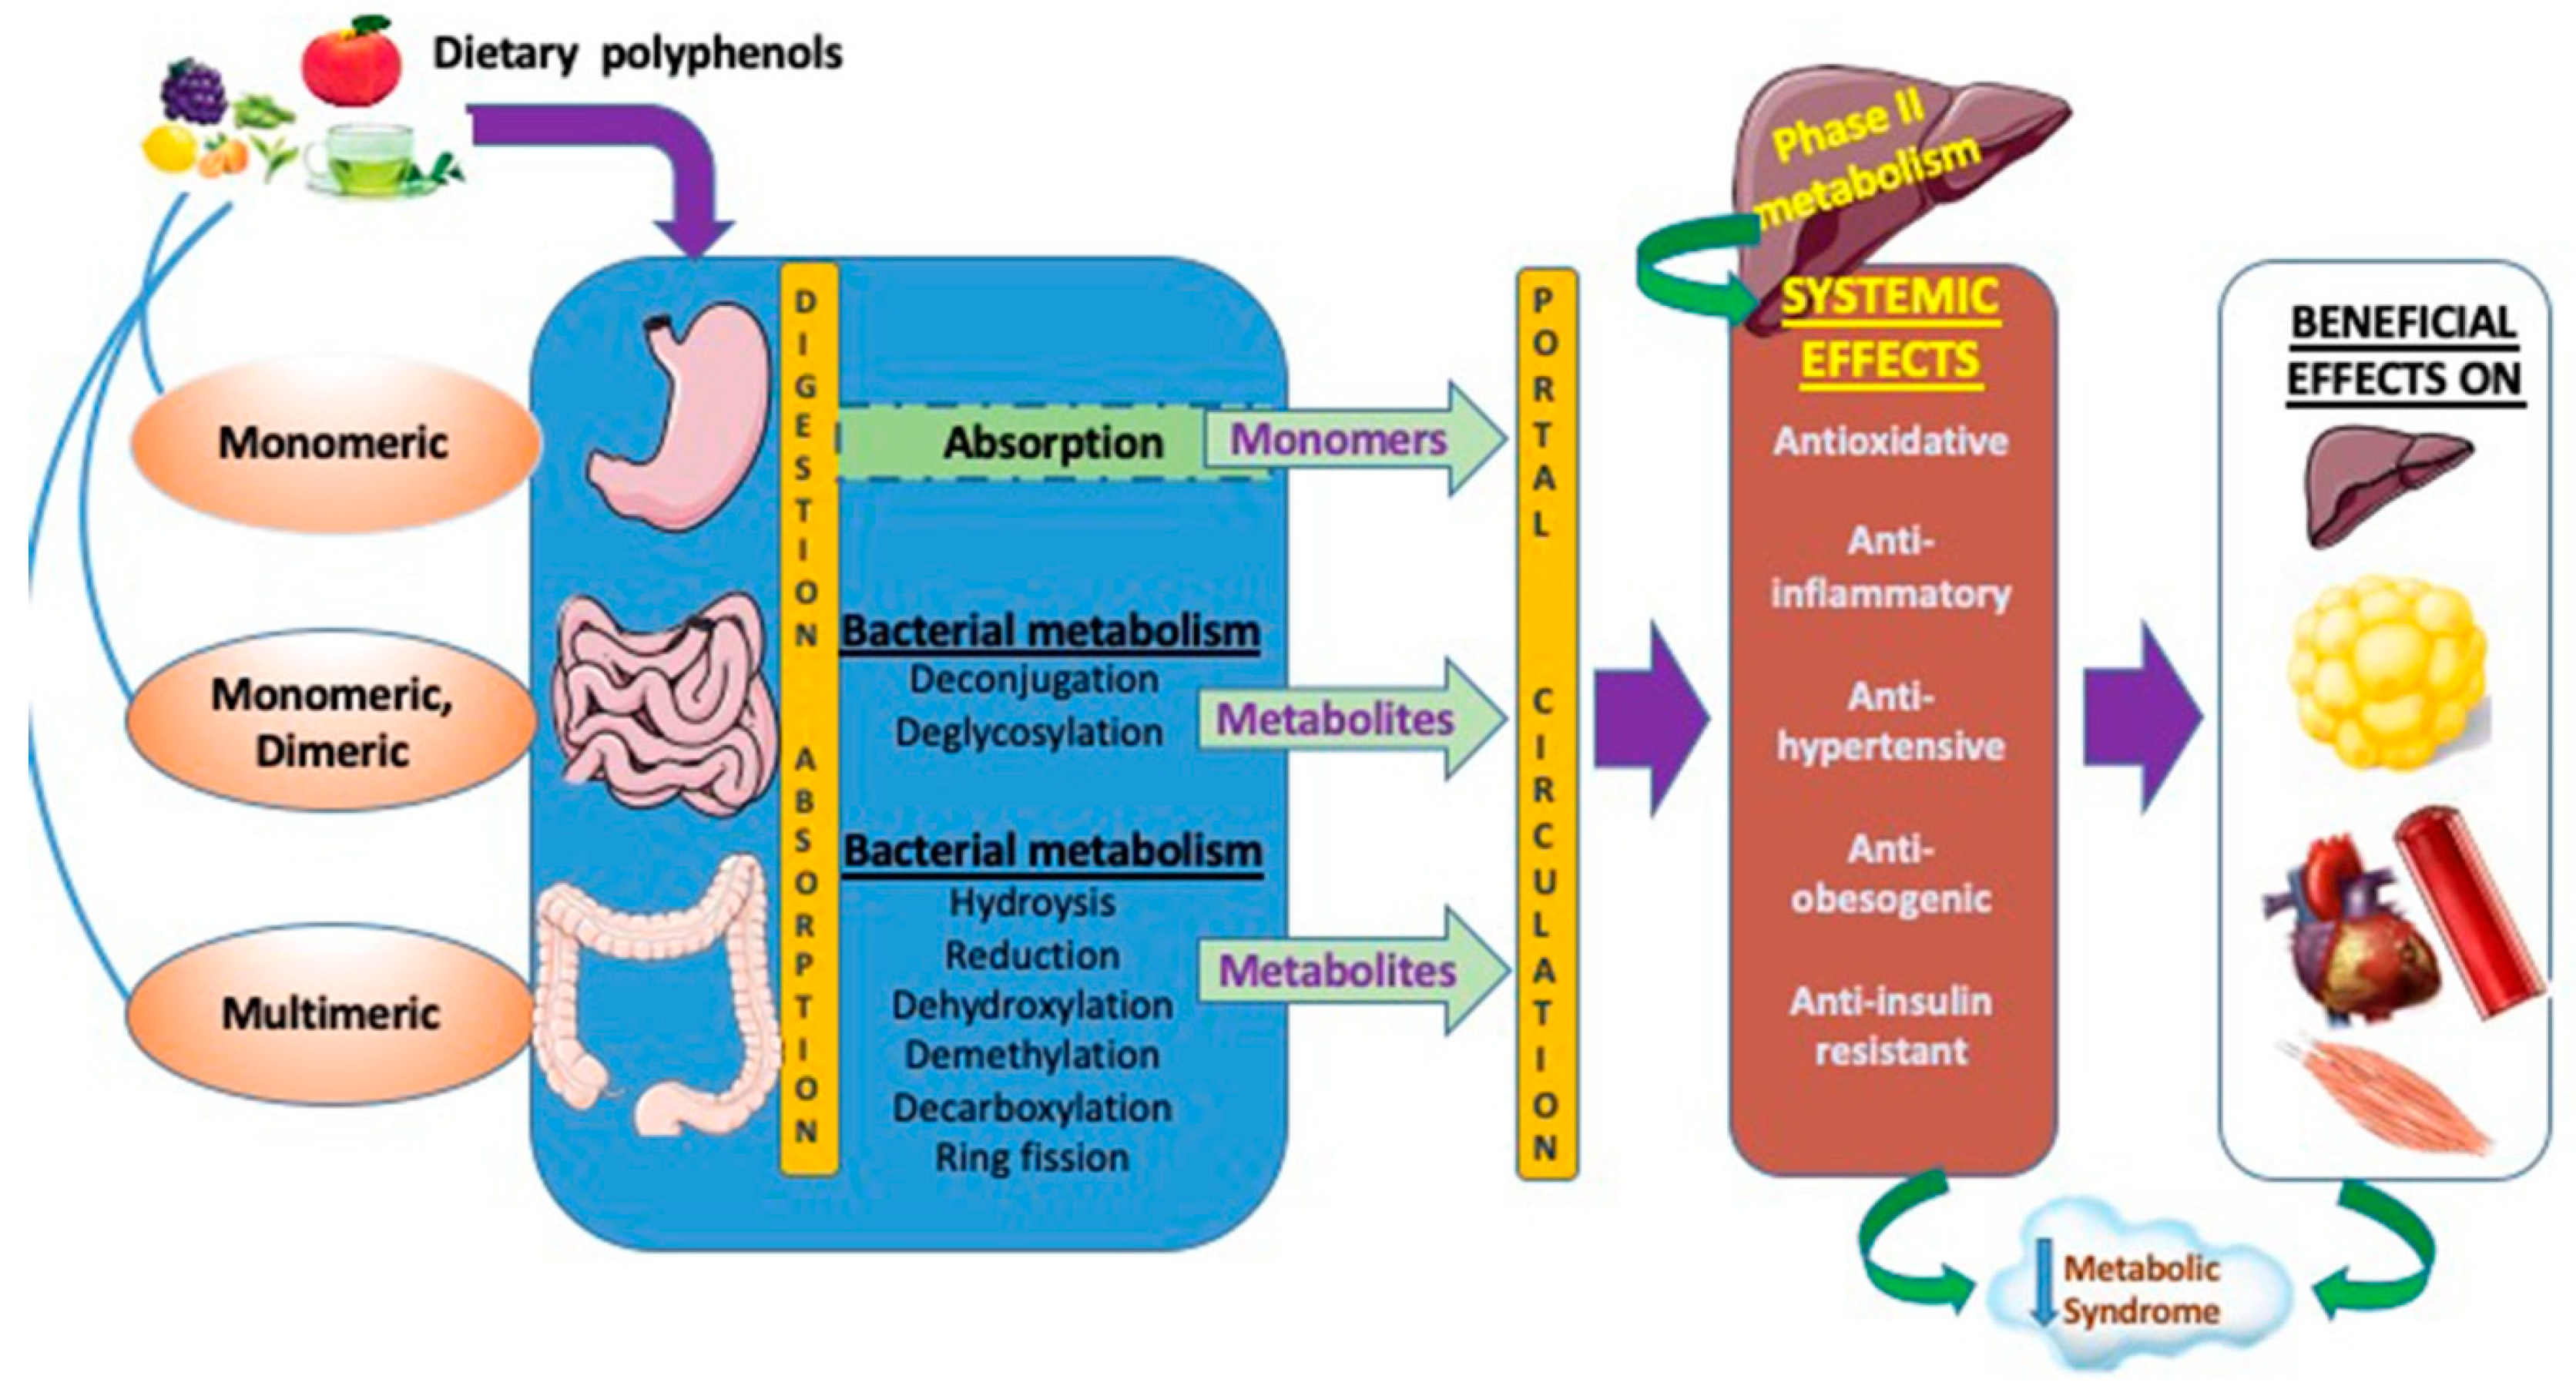 Polyphenols and metabolism